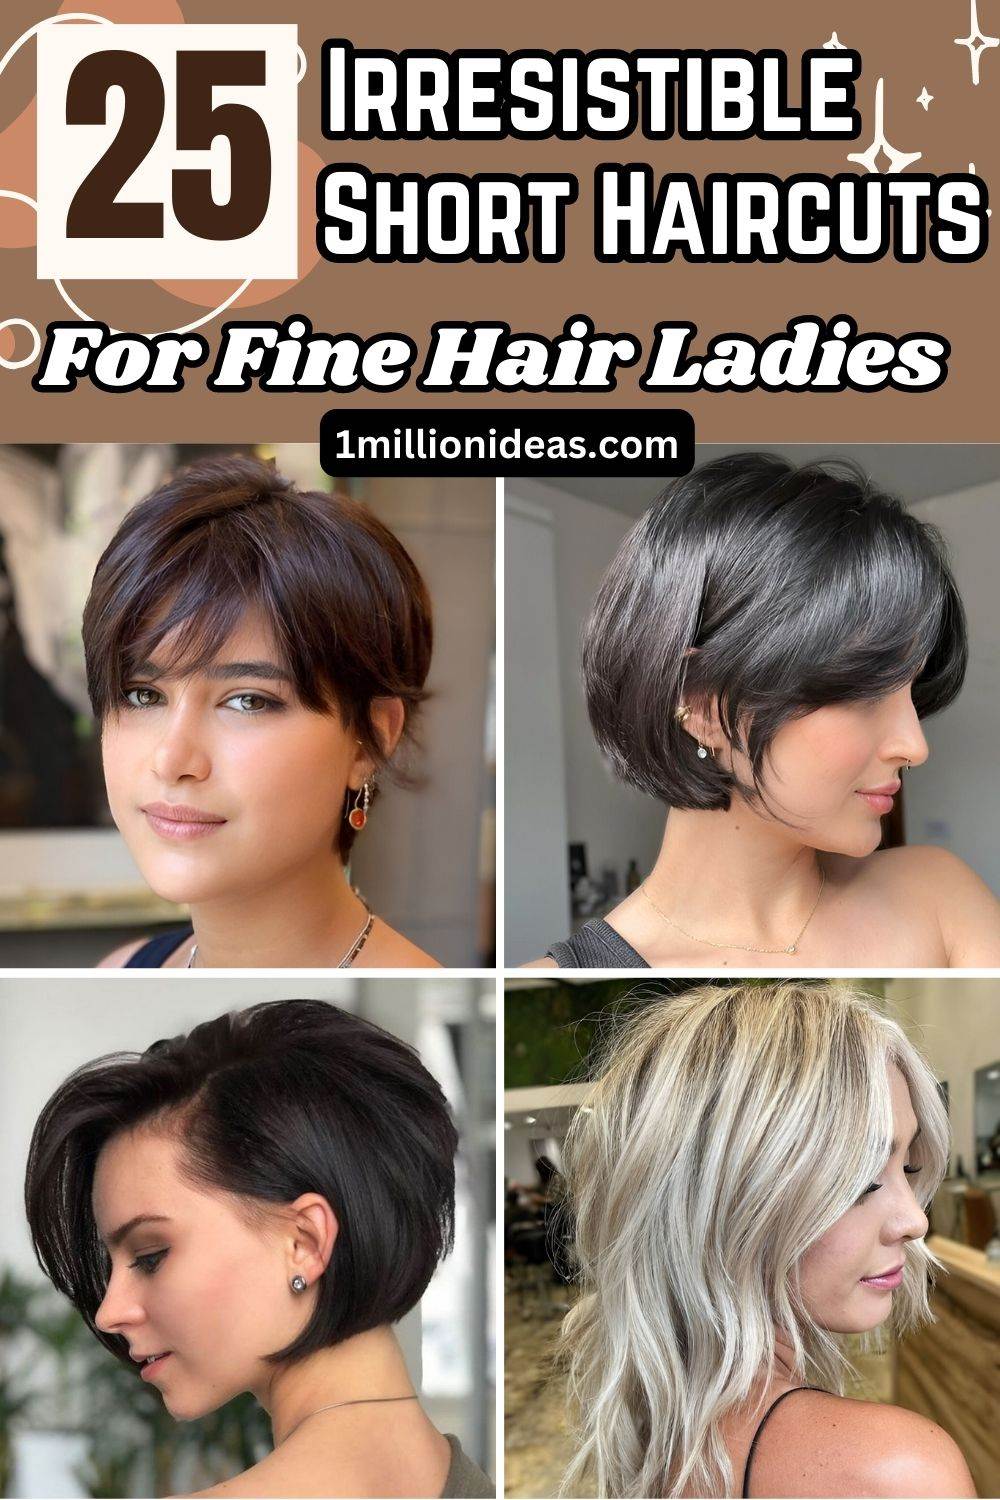 25 Irresistible Short Haircuts For Fine Hair Ladies - 161